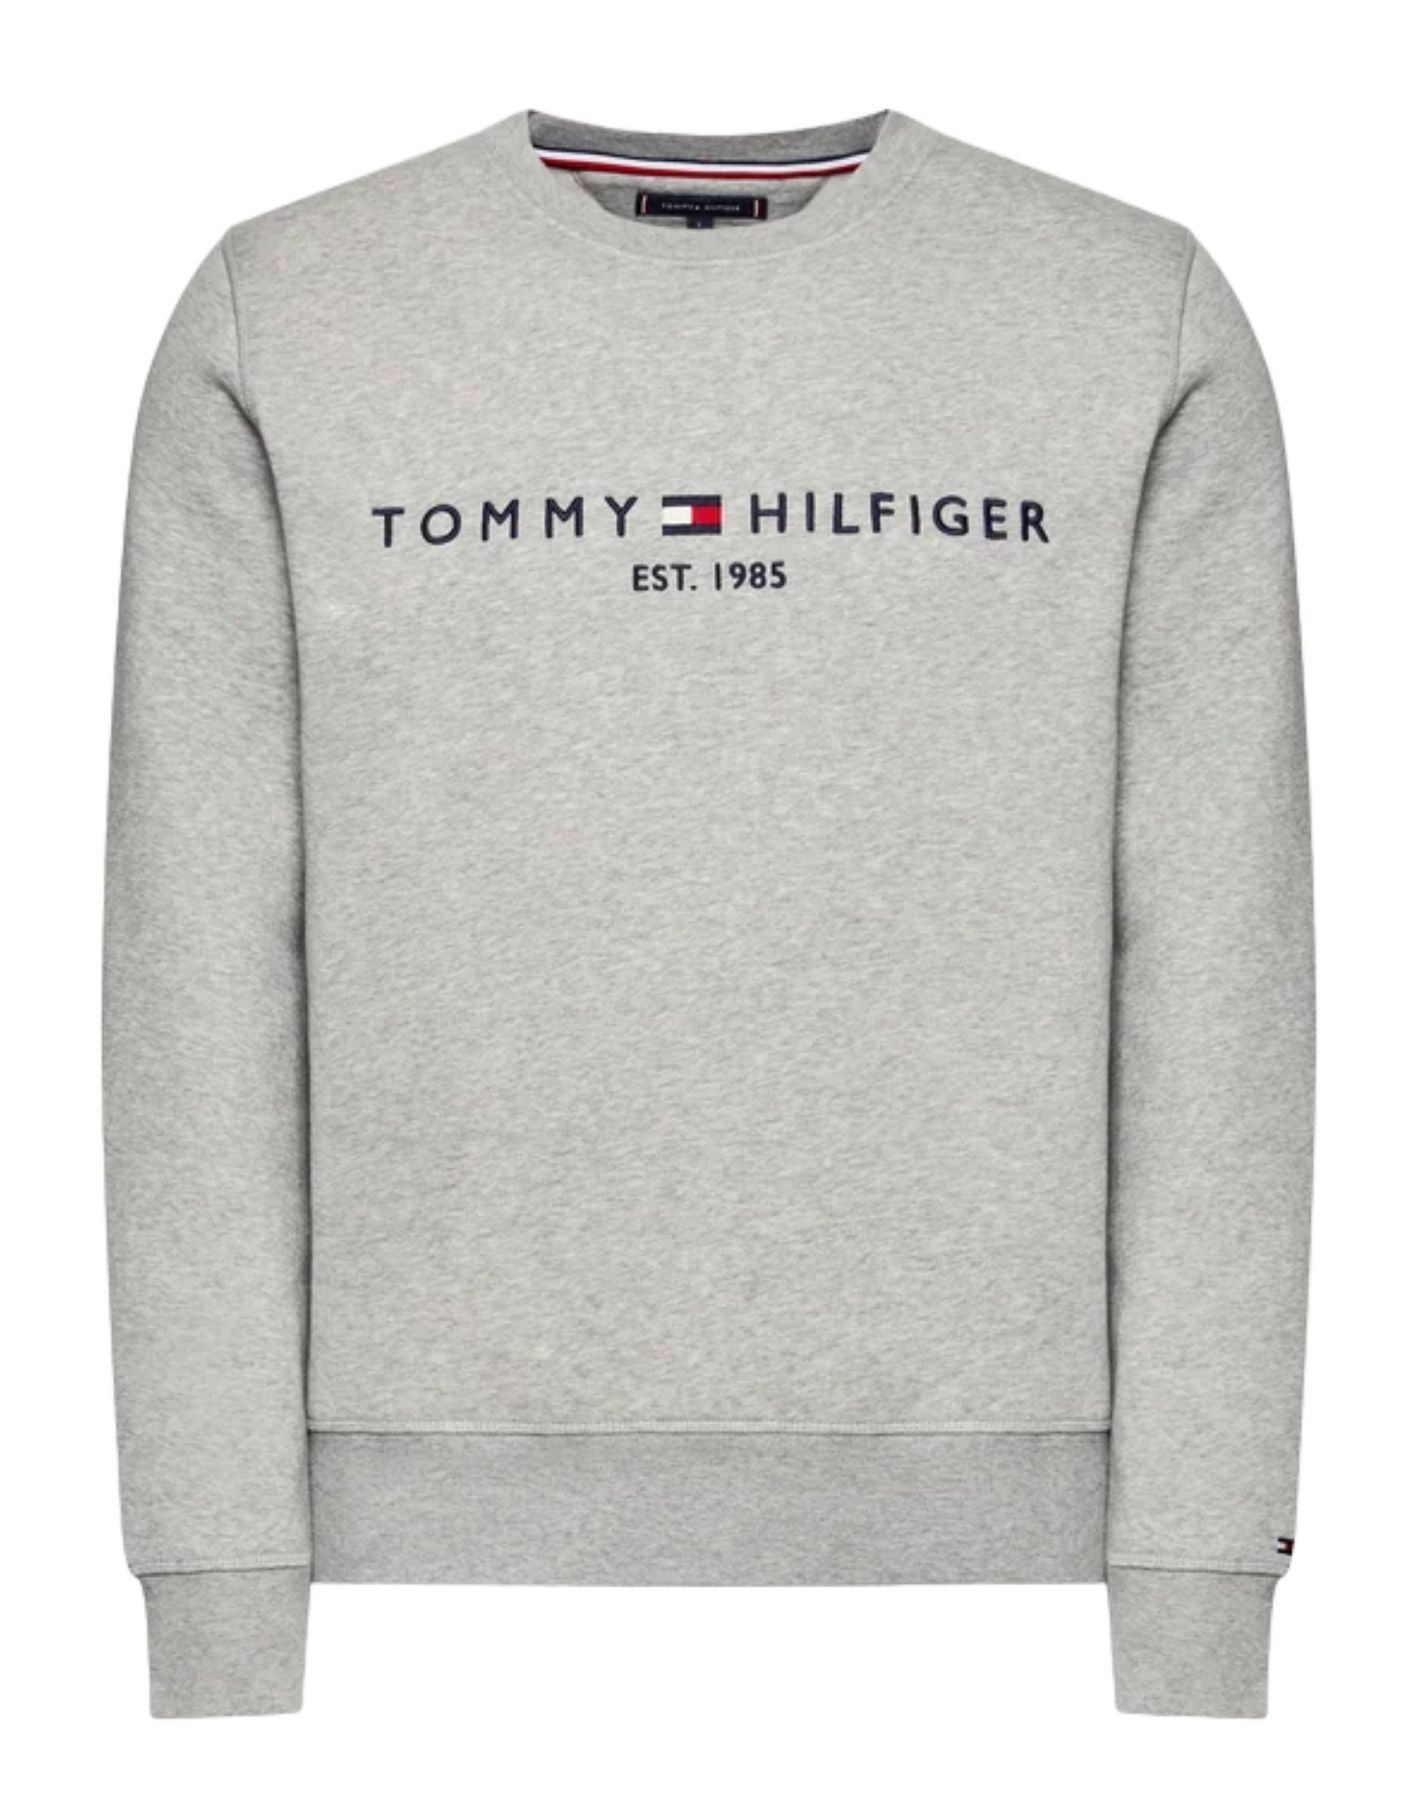 SWeat shirt TOMMY HILFIGER Homme GRIS 